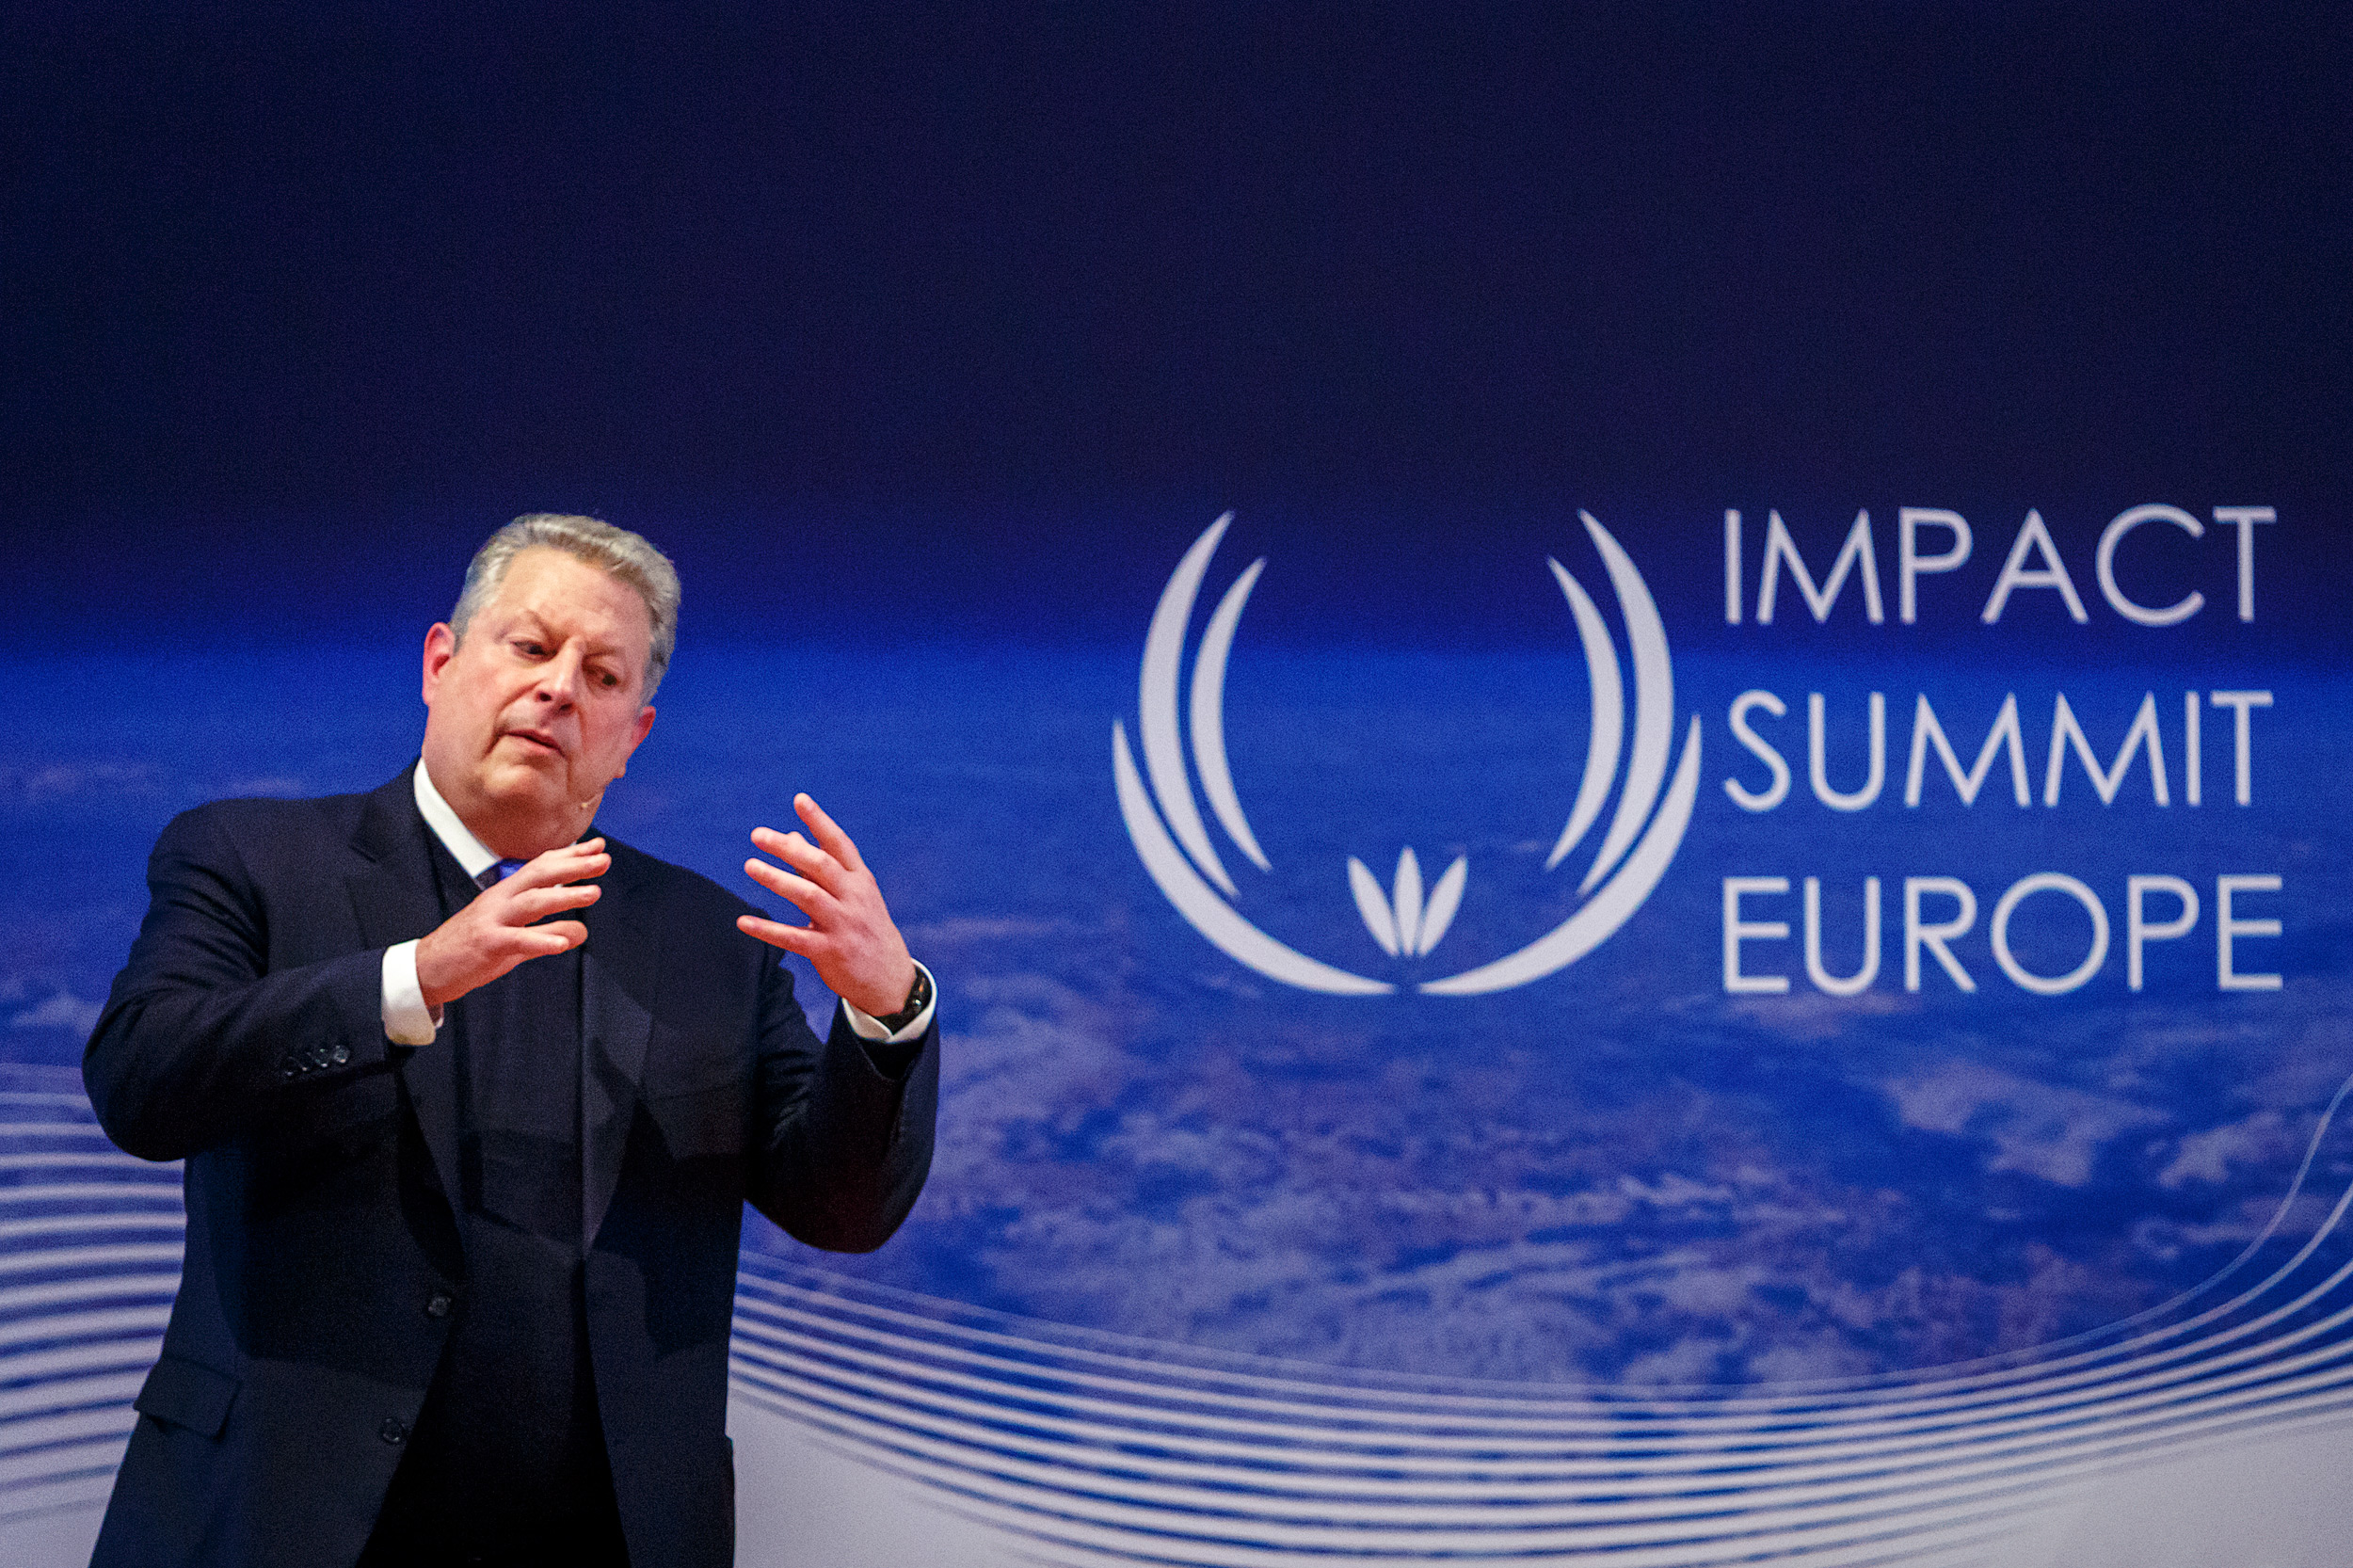 Al Gore during Impact Summit Europe 2017